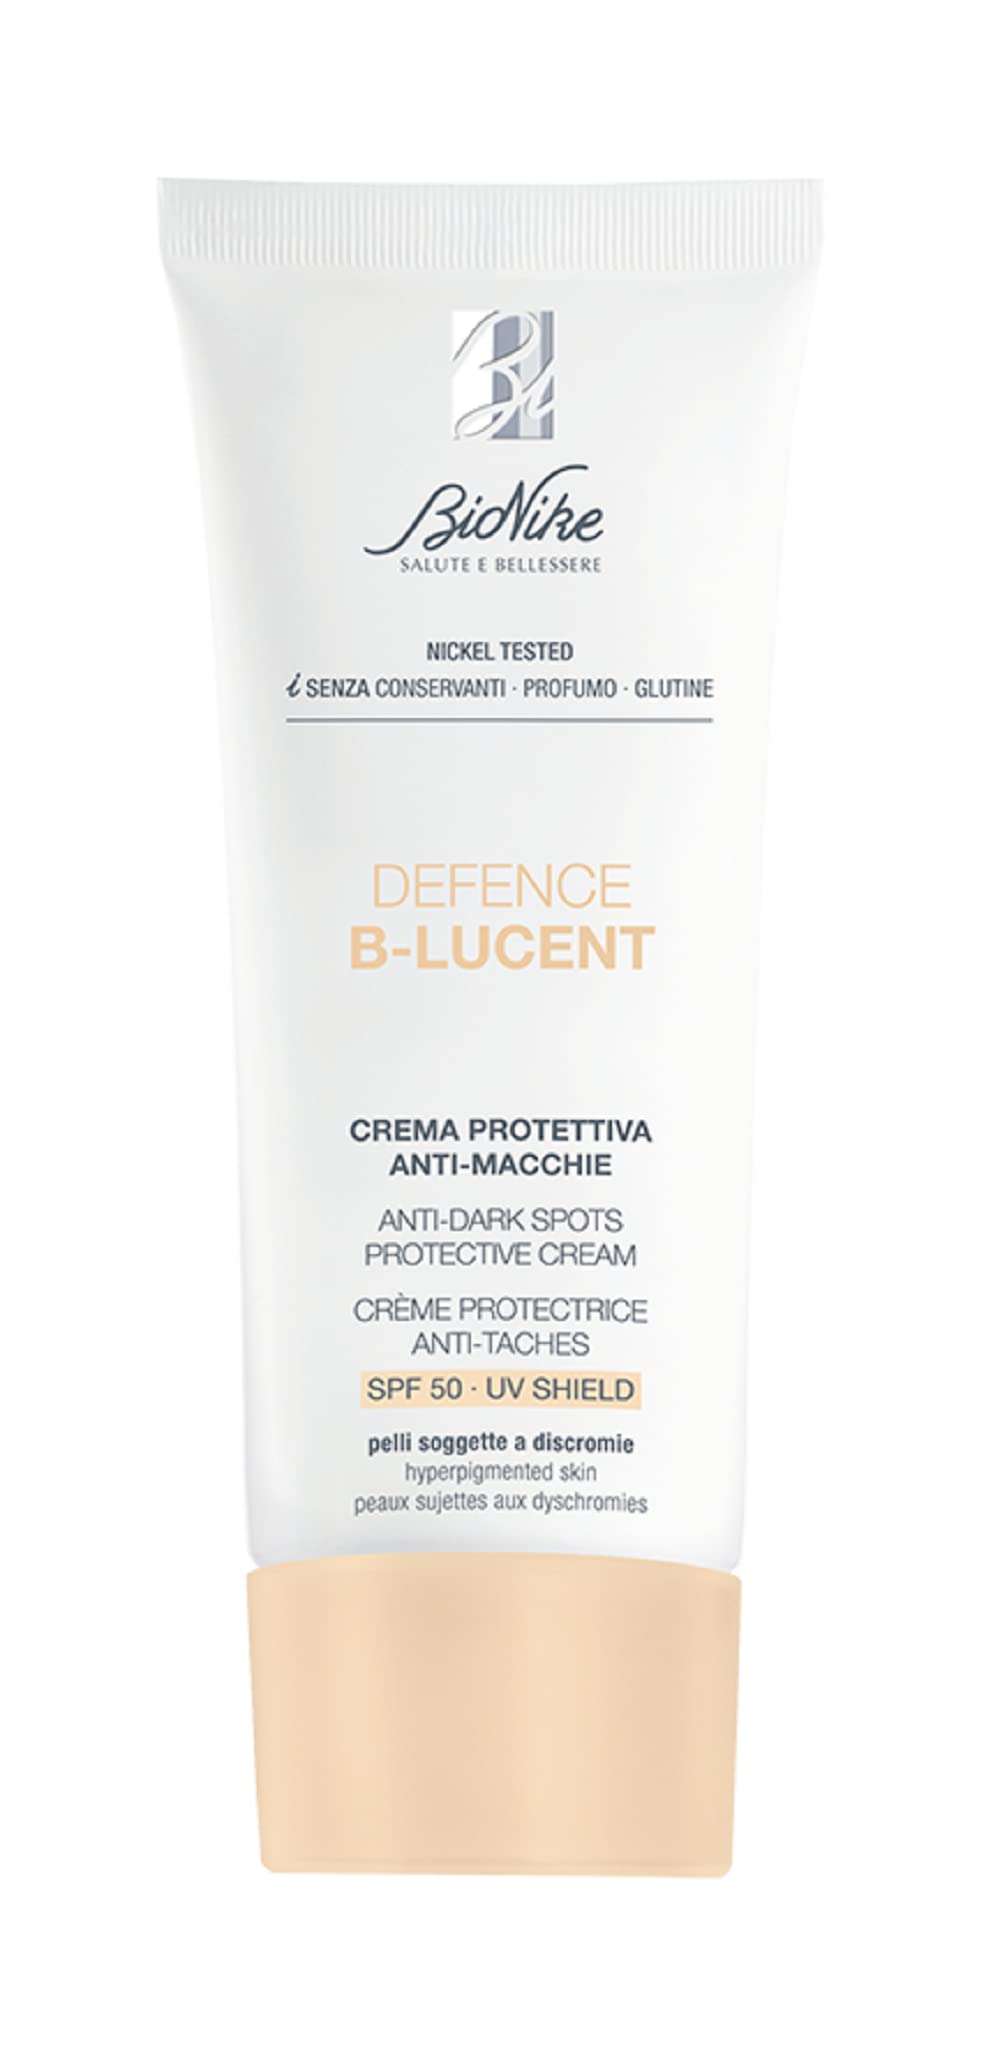 BioNike Defence B-Lucent Crema Protettiva Anti-Macchie Spf50 40ml